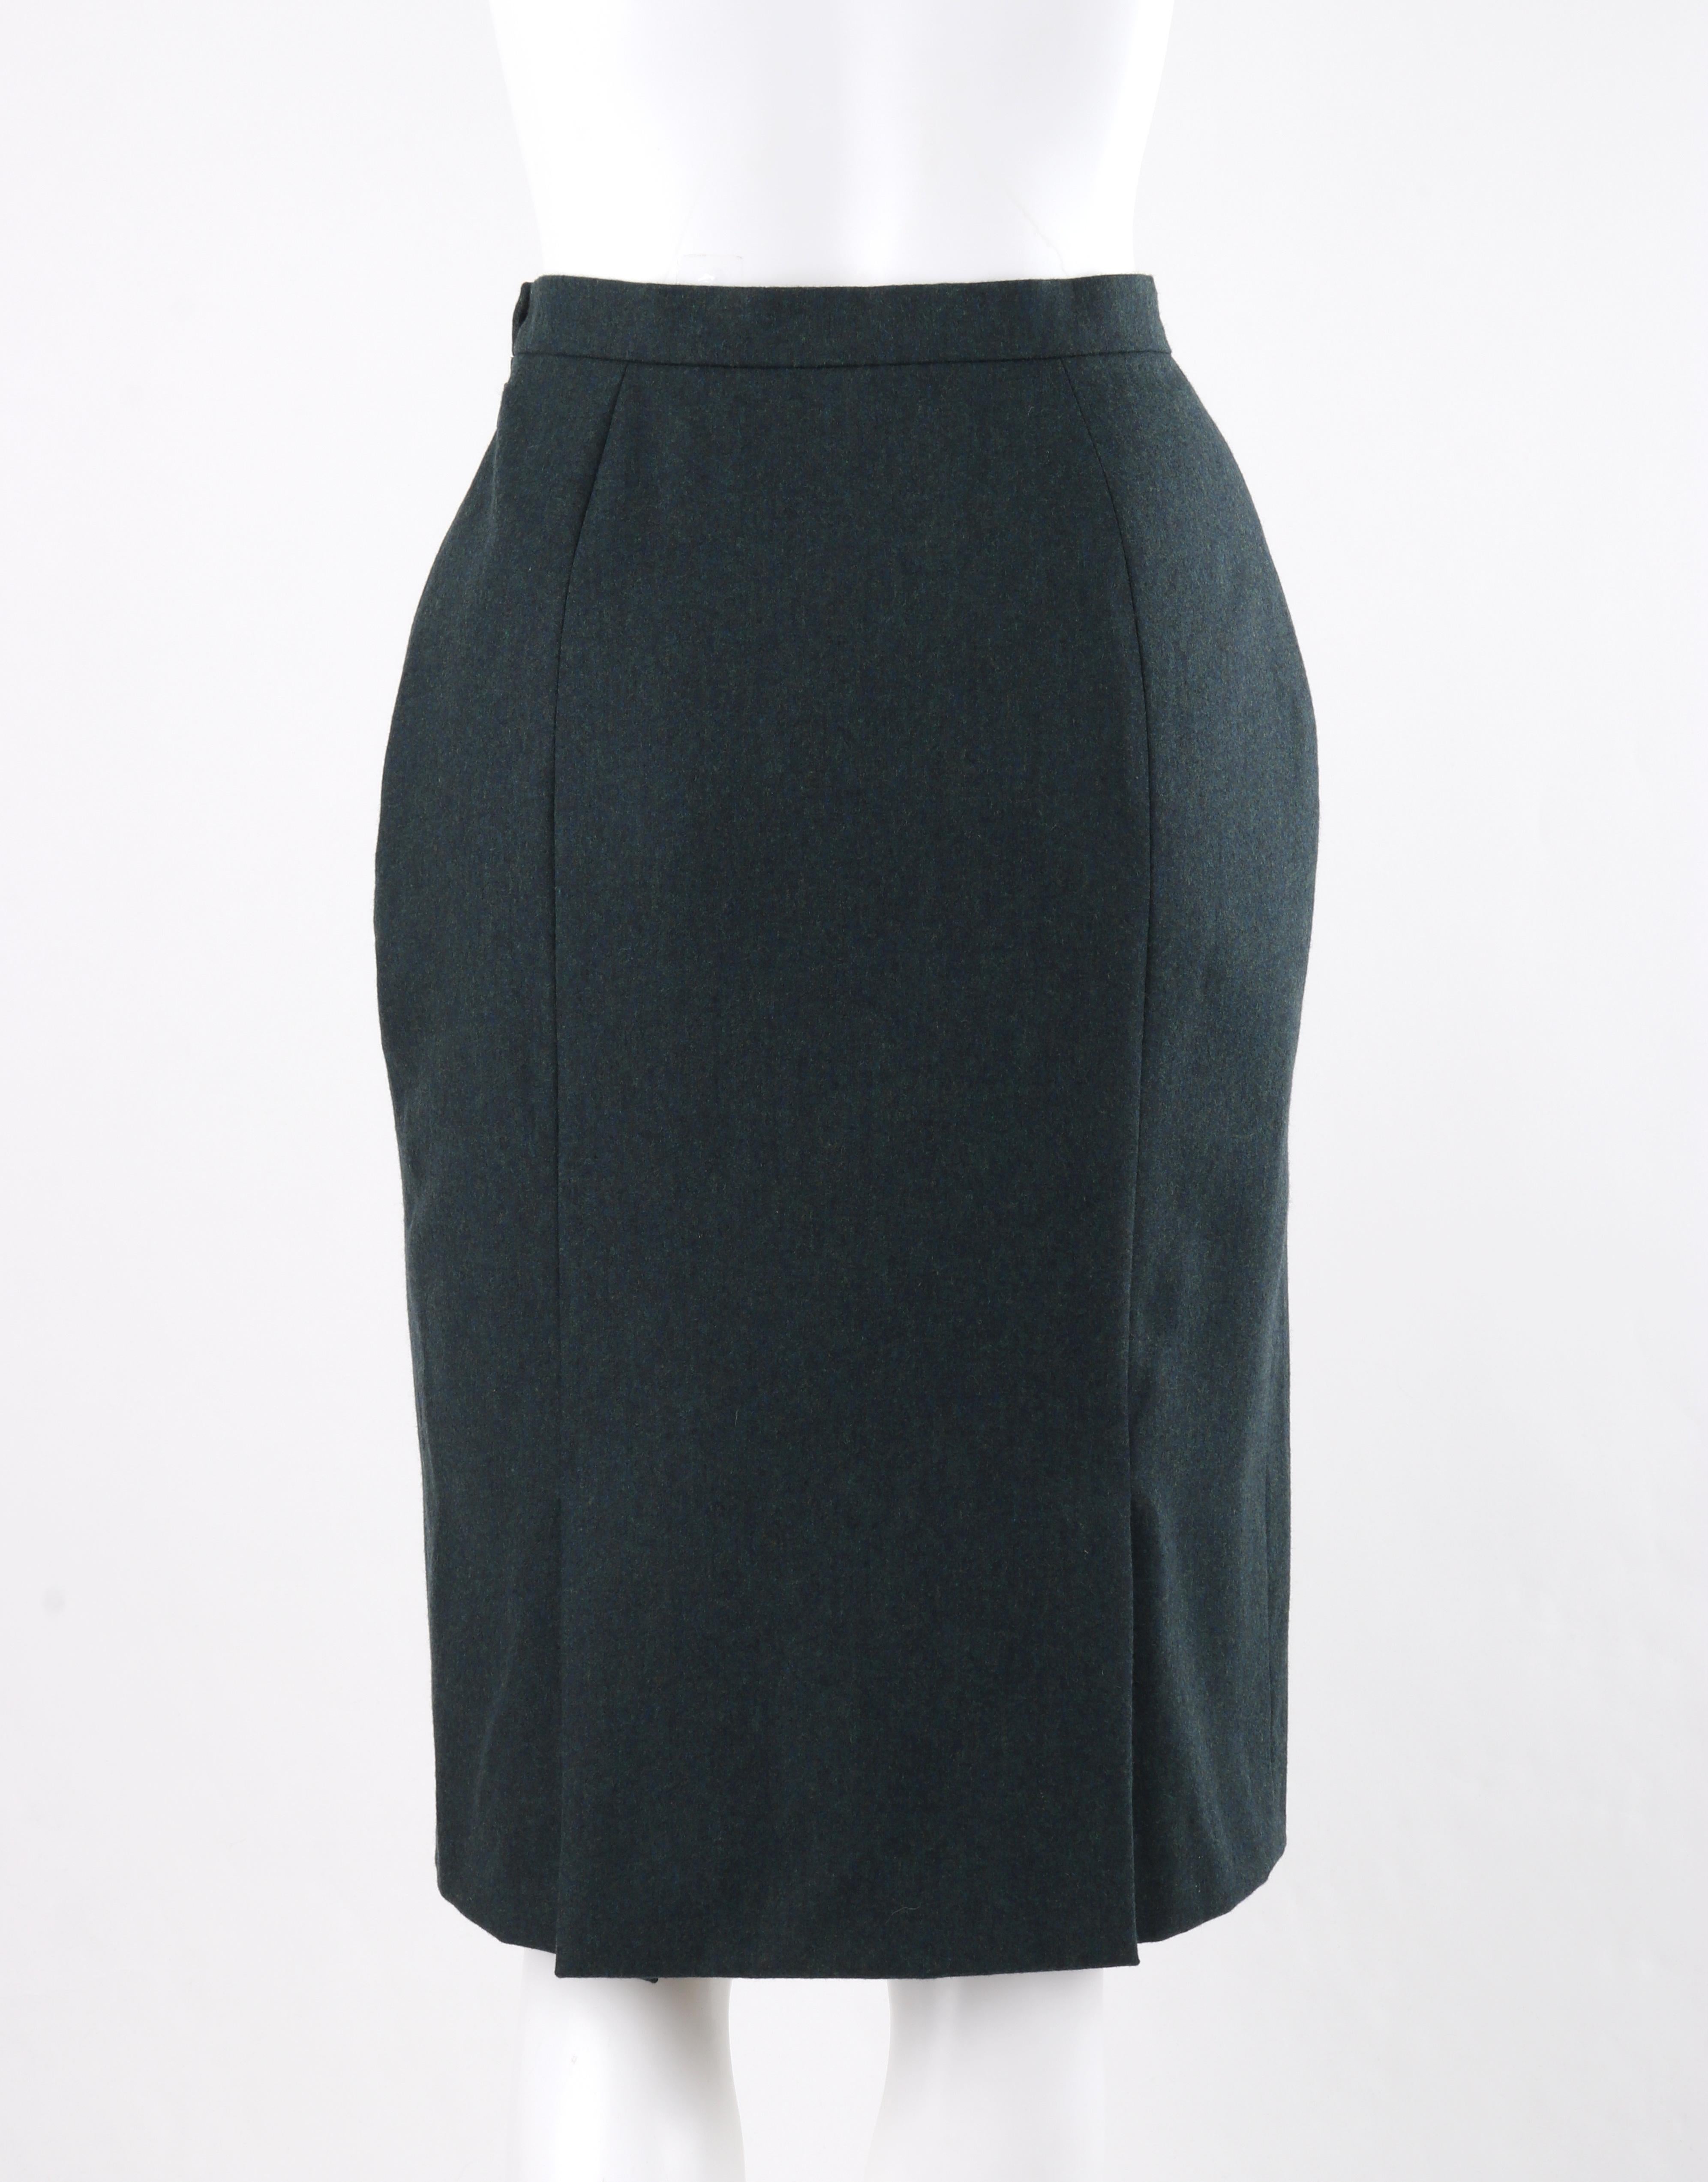 Women's GIVENCHY Couture A/W 1998 ALEXANDER McQUEEN Dark Green Tailored Blazer Skirt Set For Sale